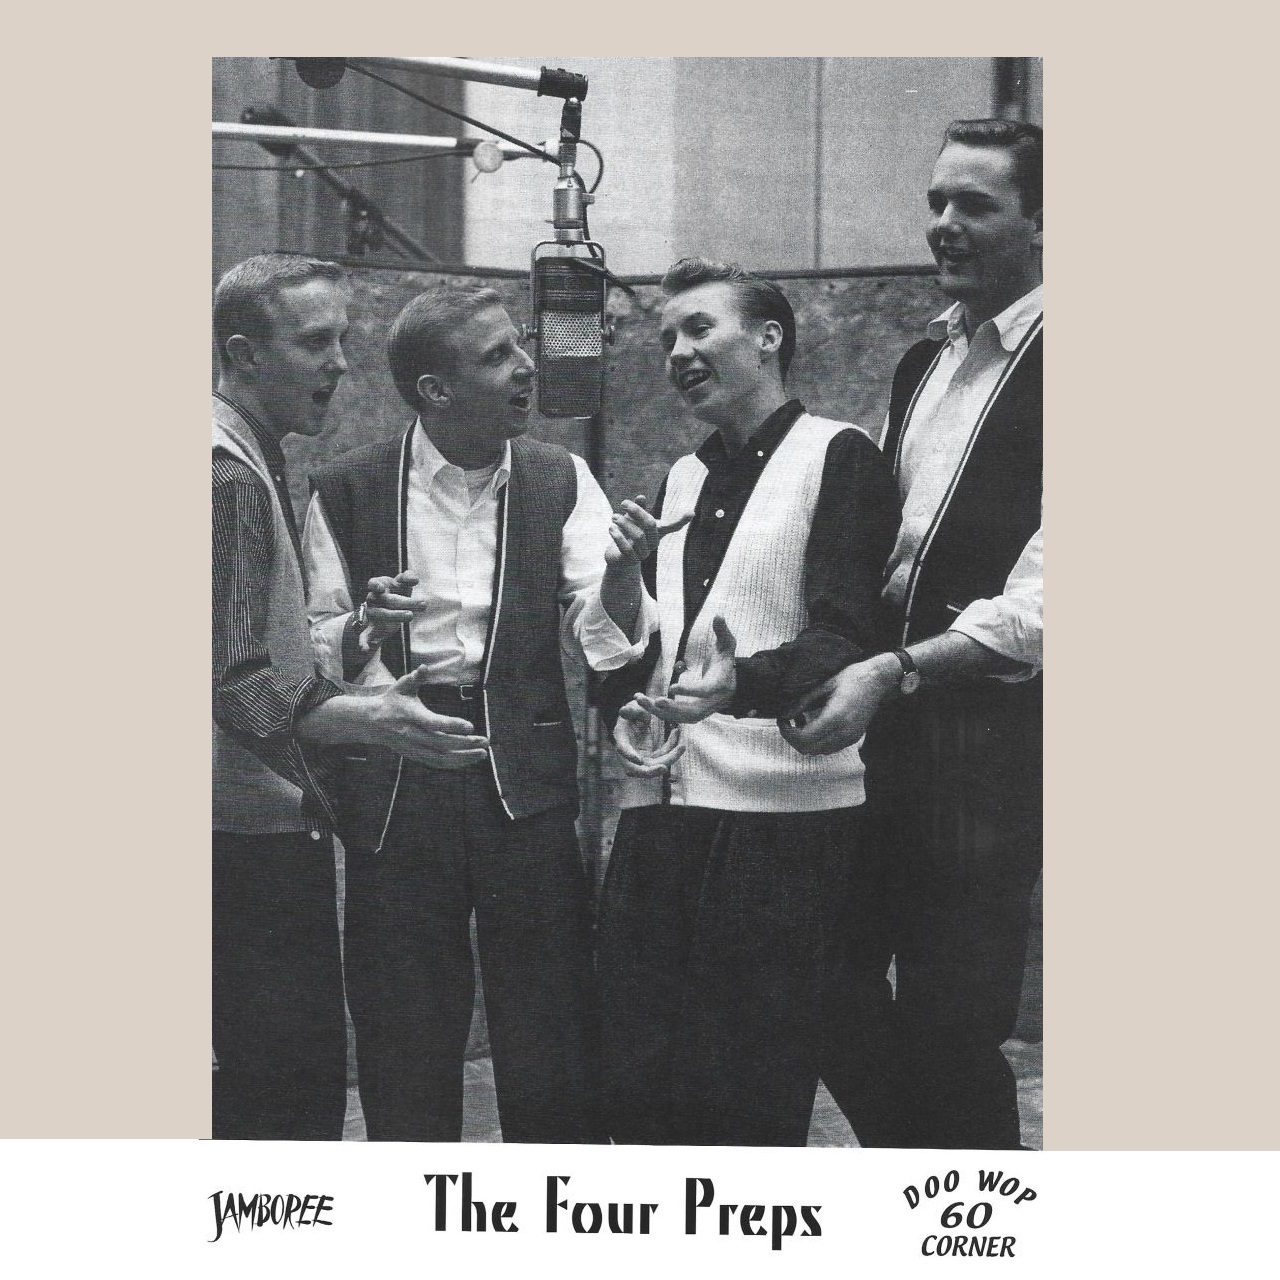 Doo Wop Corner - The Four Preps